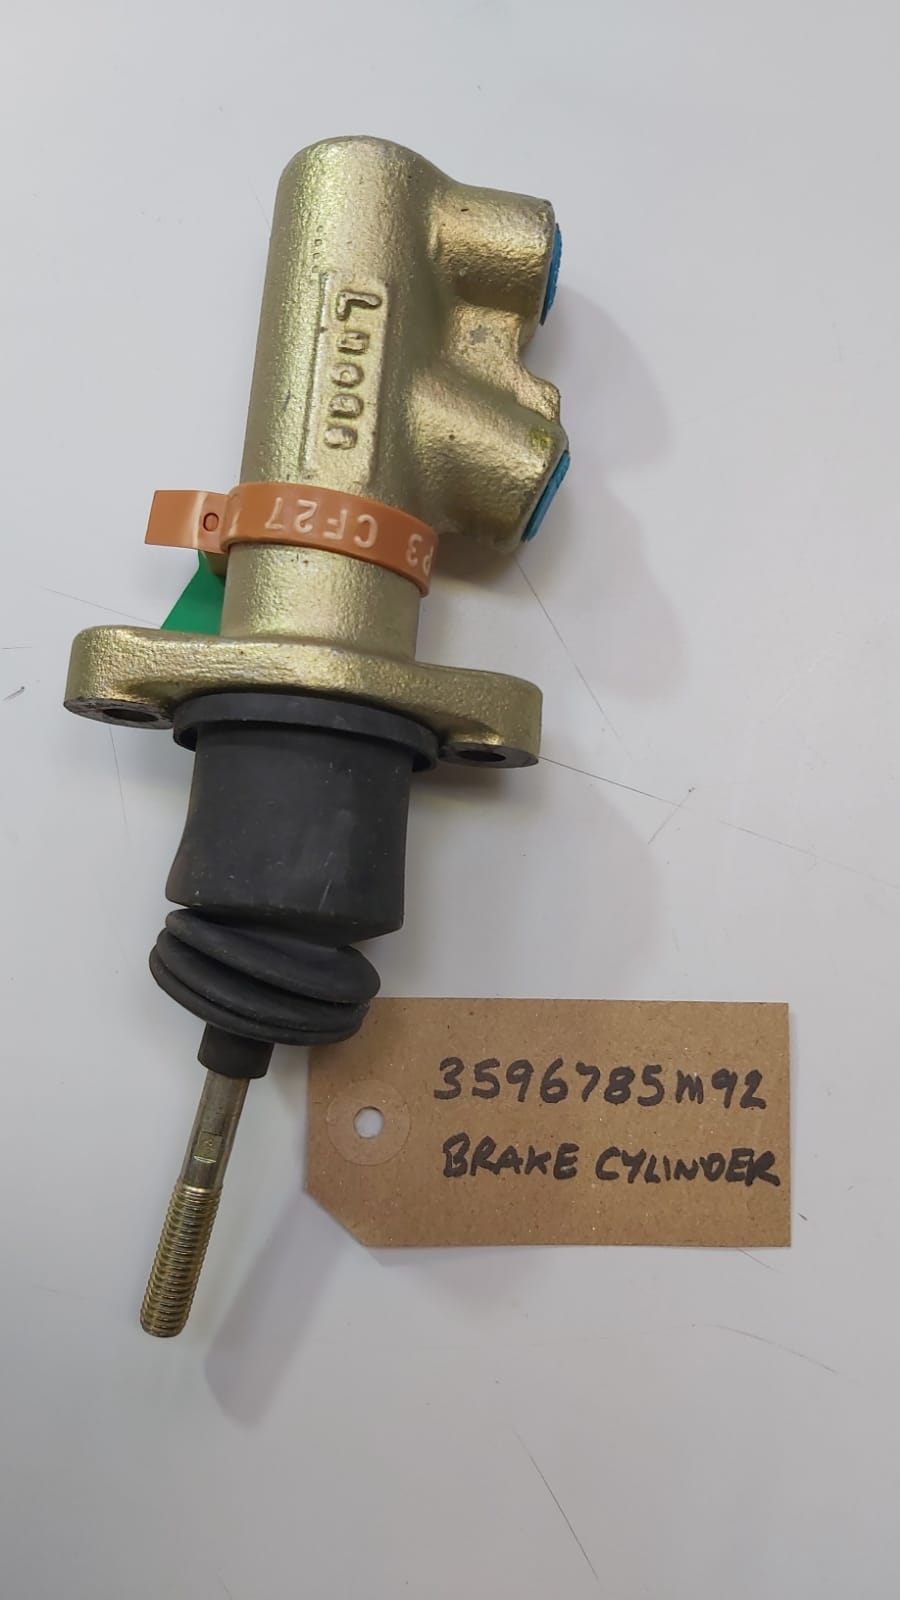 brake-cylinder-3596785m92